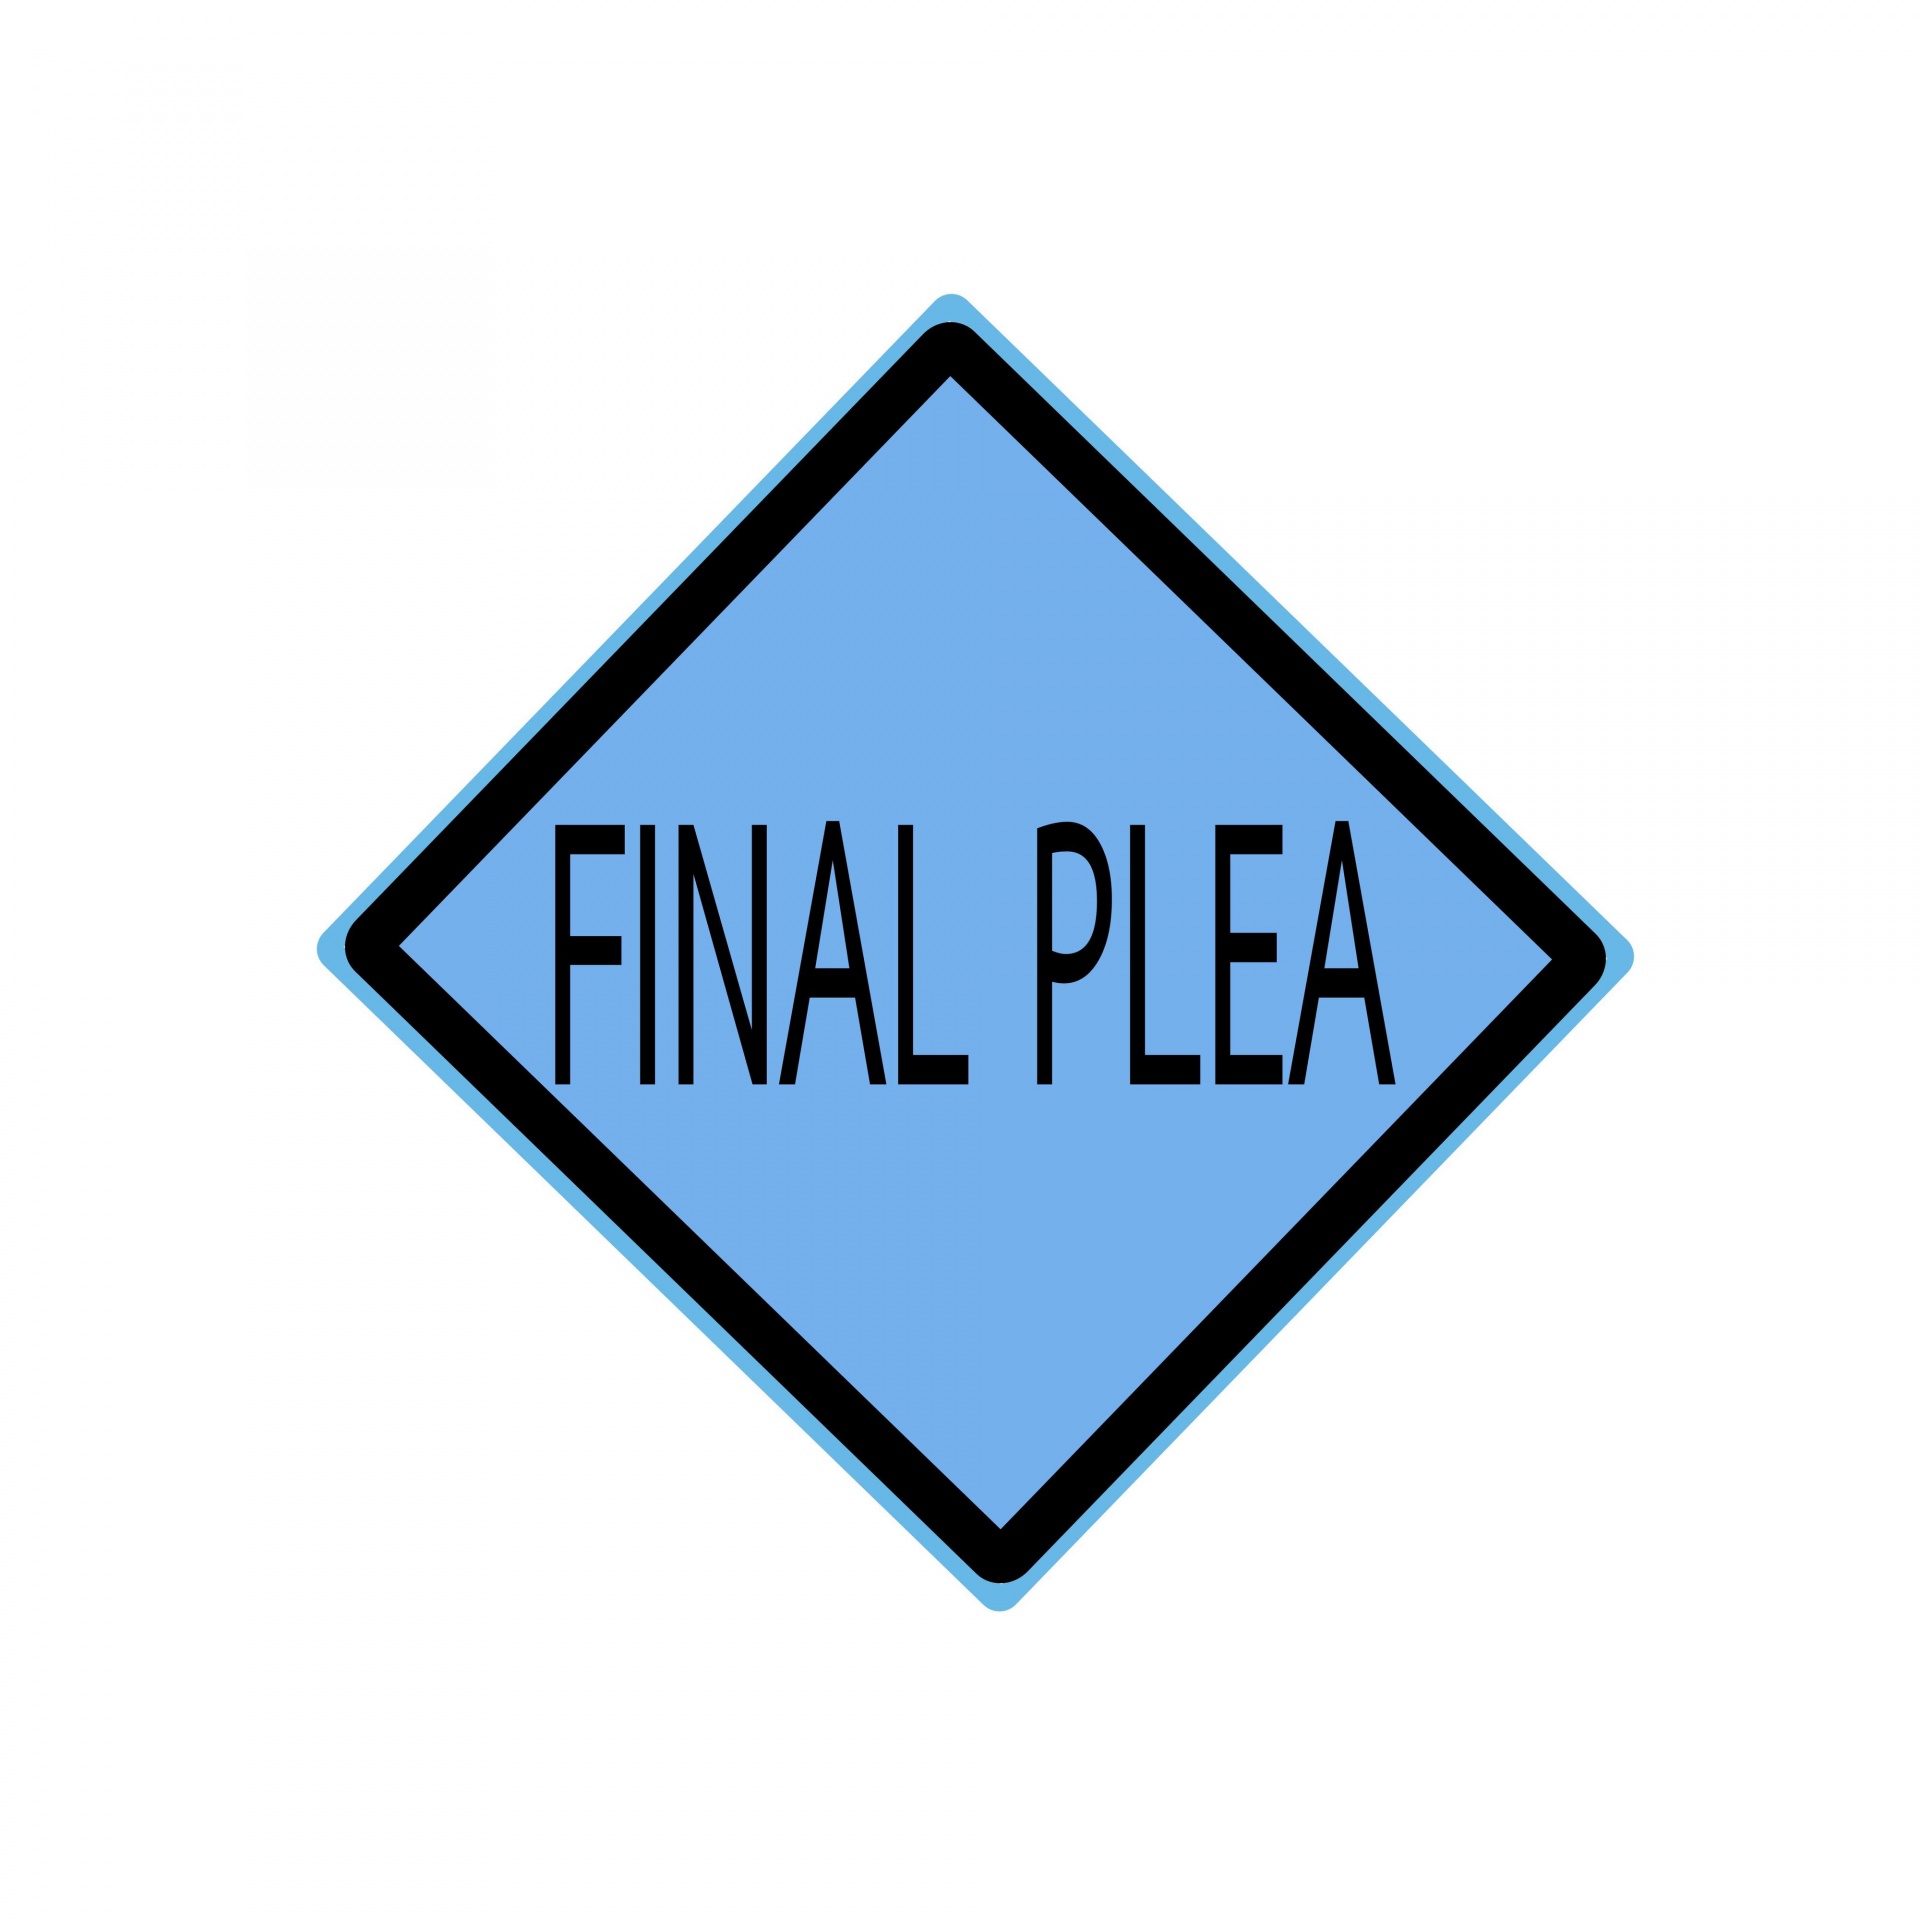 Final Plea Black Stamp Text On Blue